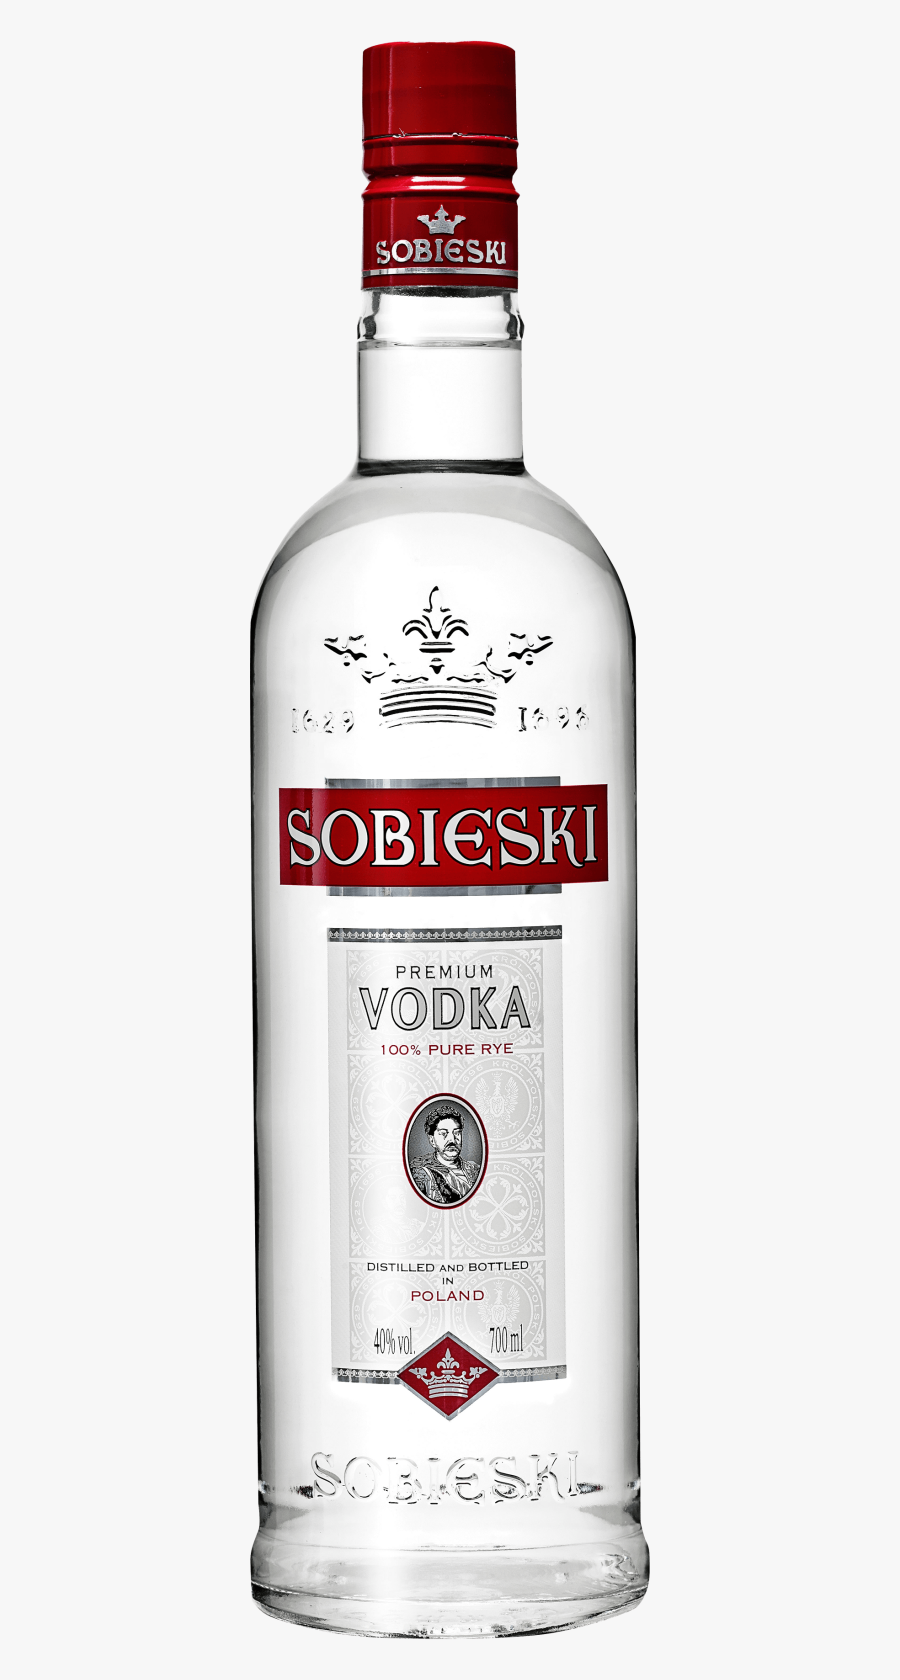 Sobieski Vodka Png, Transparent Clipart